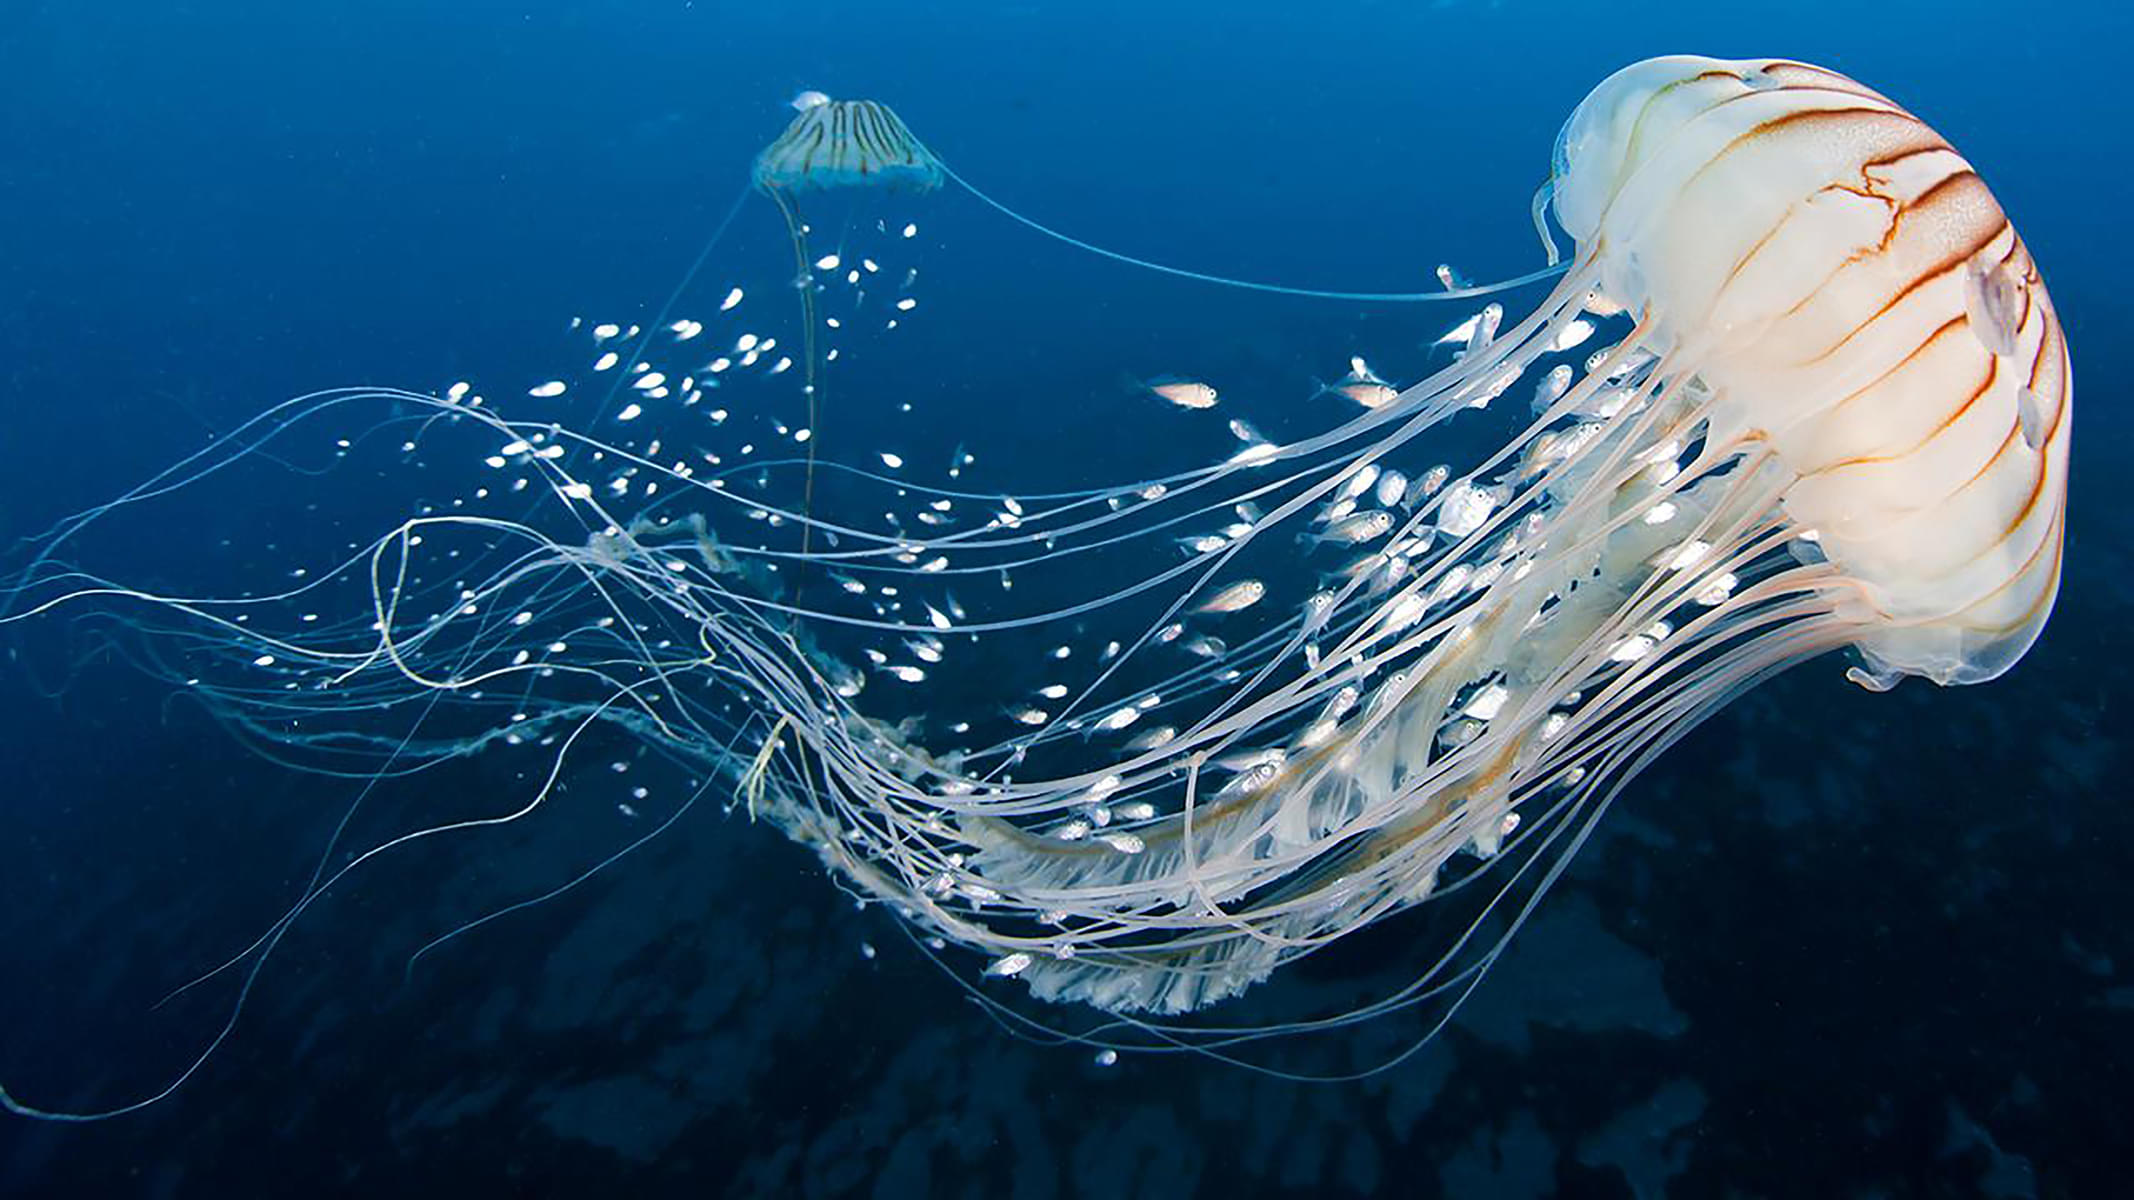 Get amazed by watching jellyfishes in the underwater aquarium